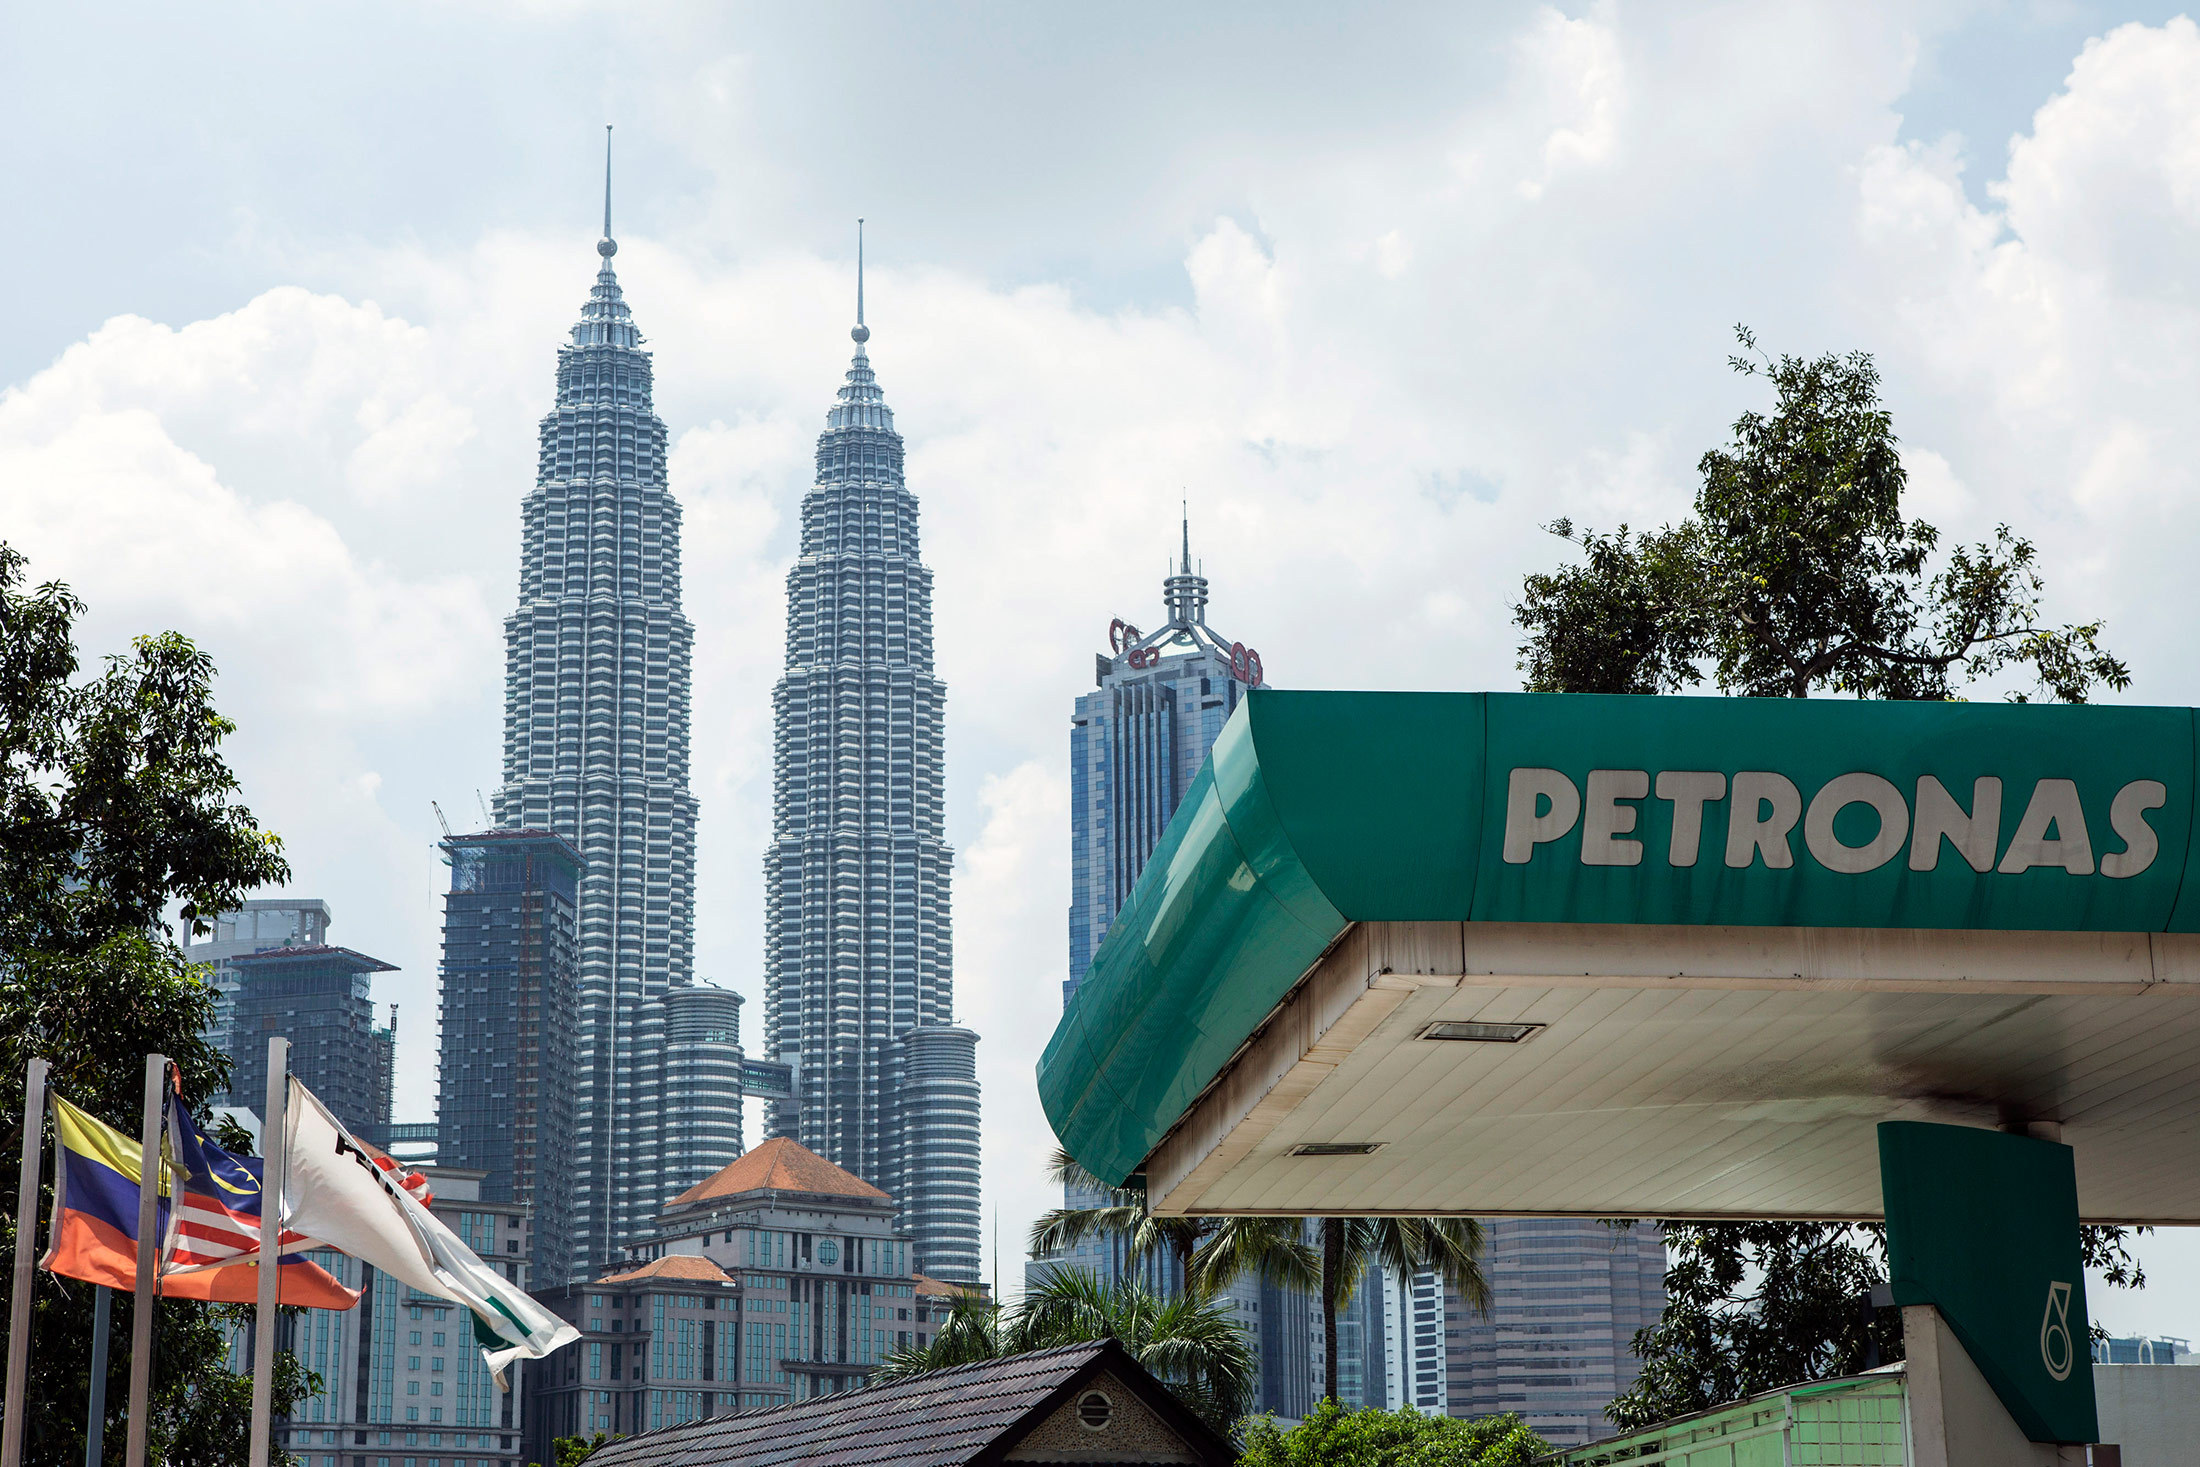 Petronas Predicts $50-60 Crude | Financial Tribune